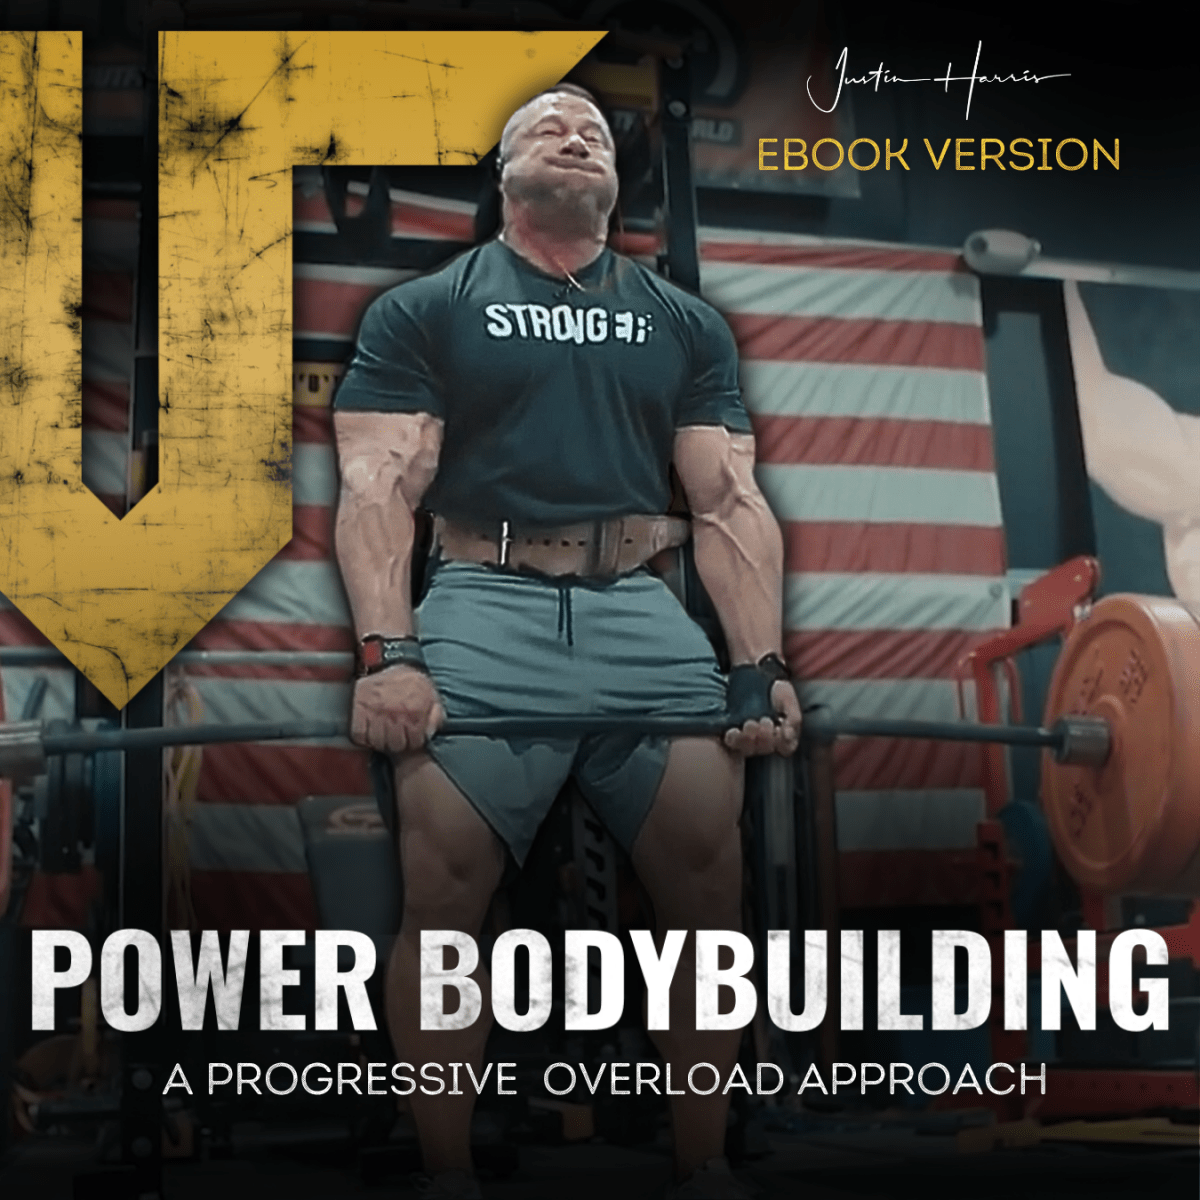 Power Bodybuilding Training Program - Troponin Nutrition